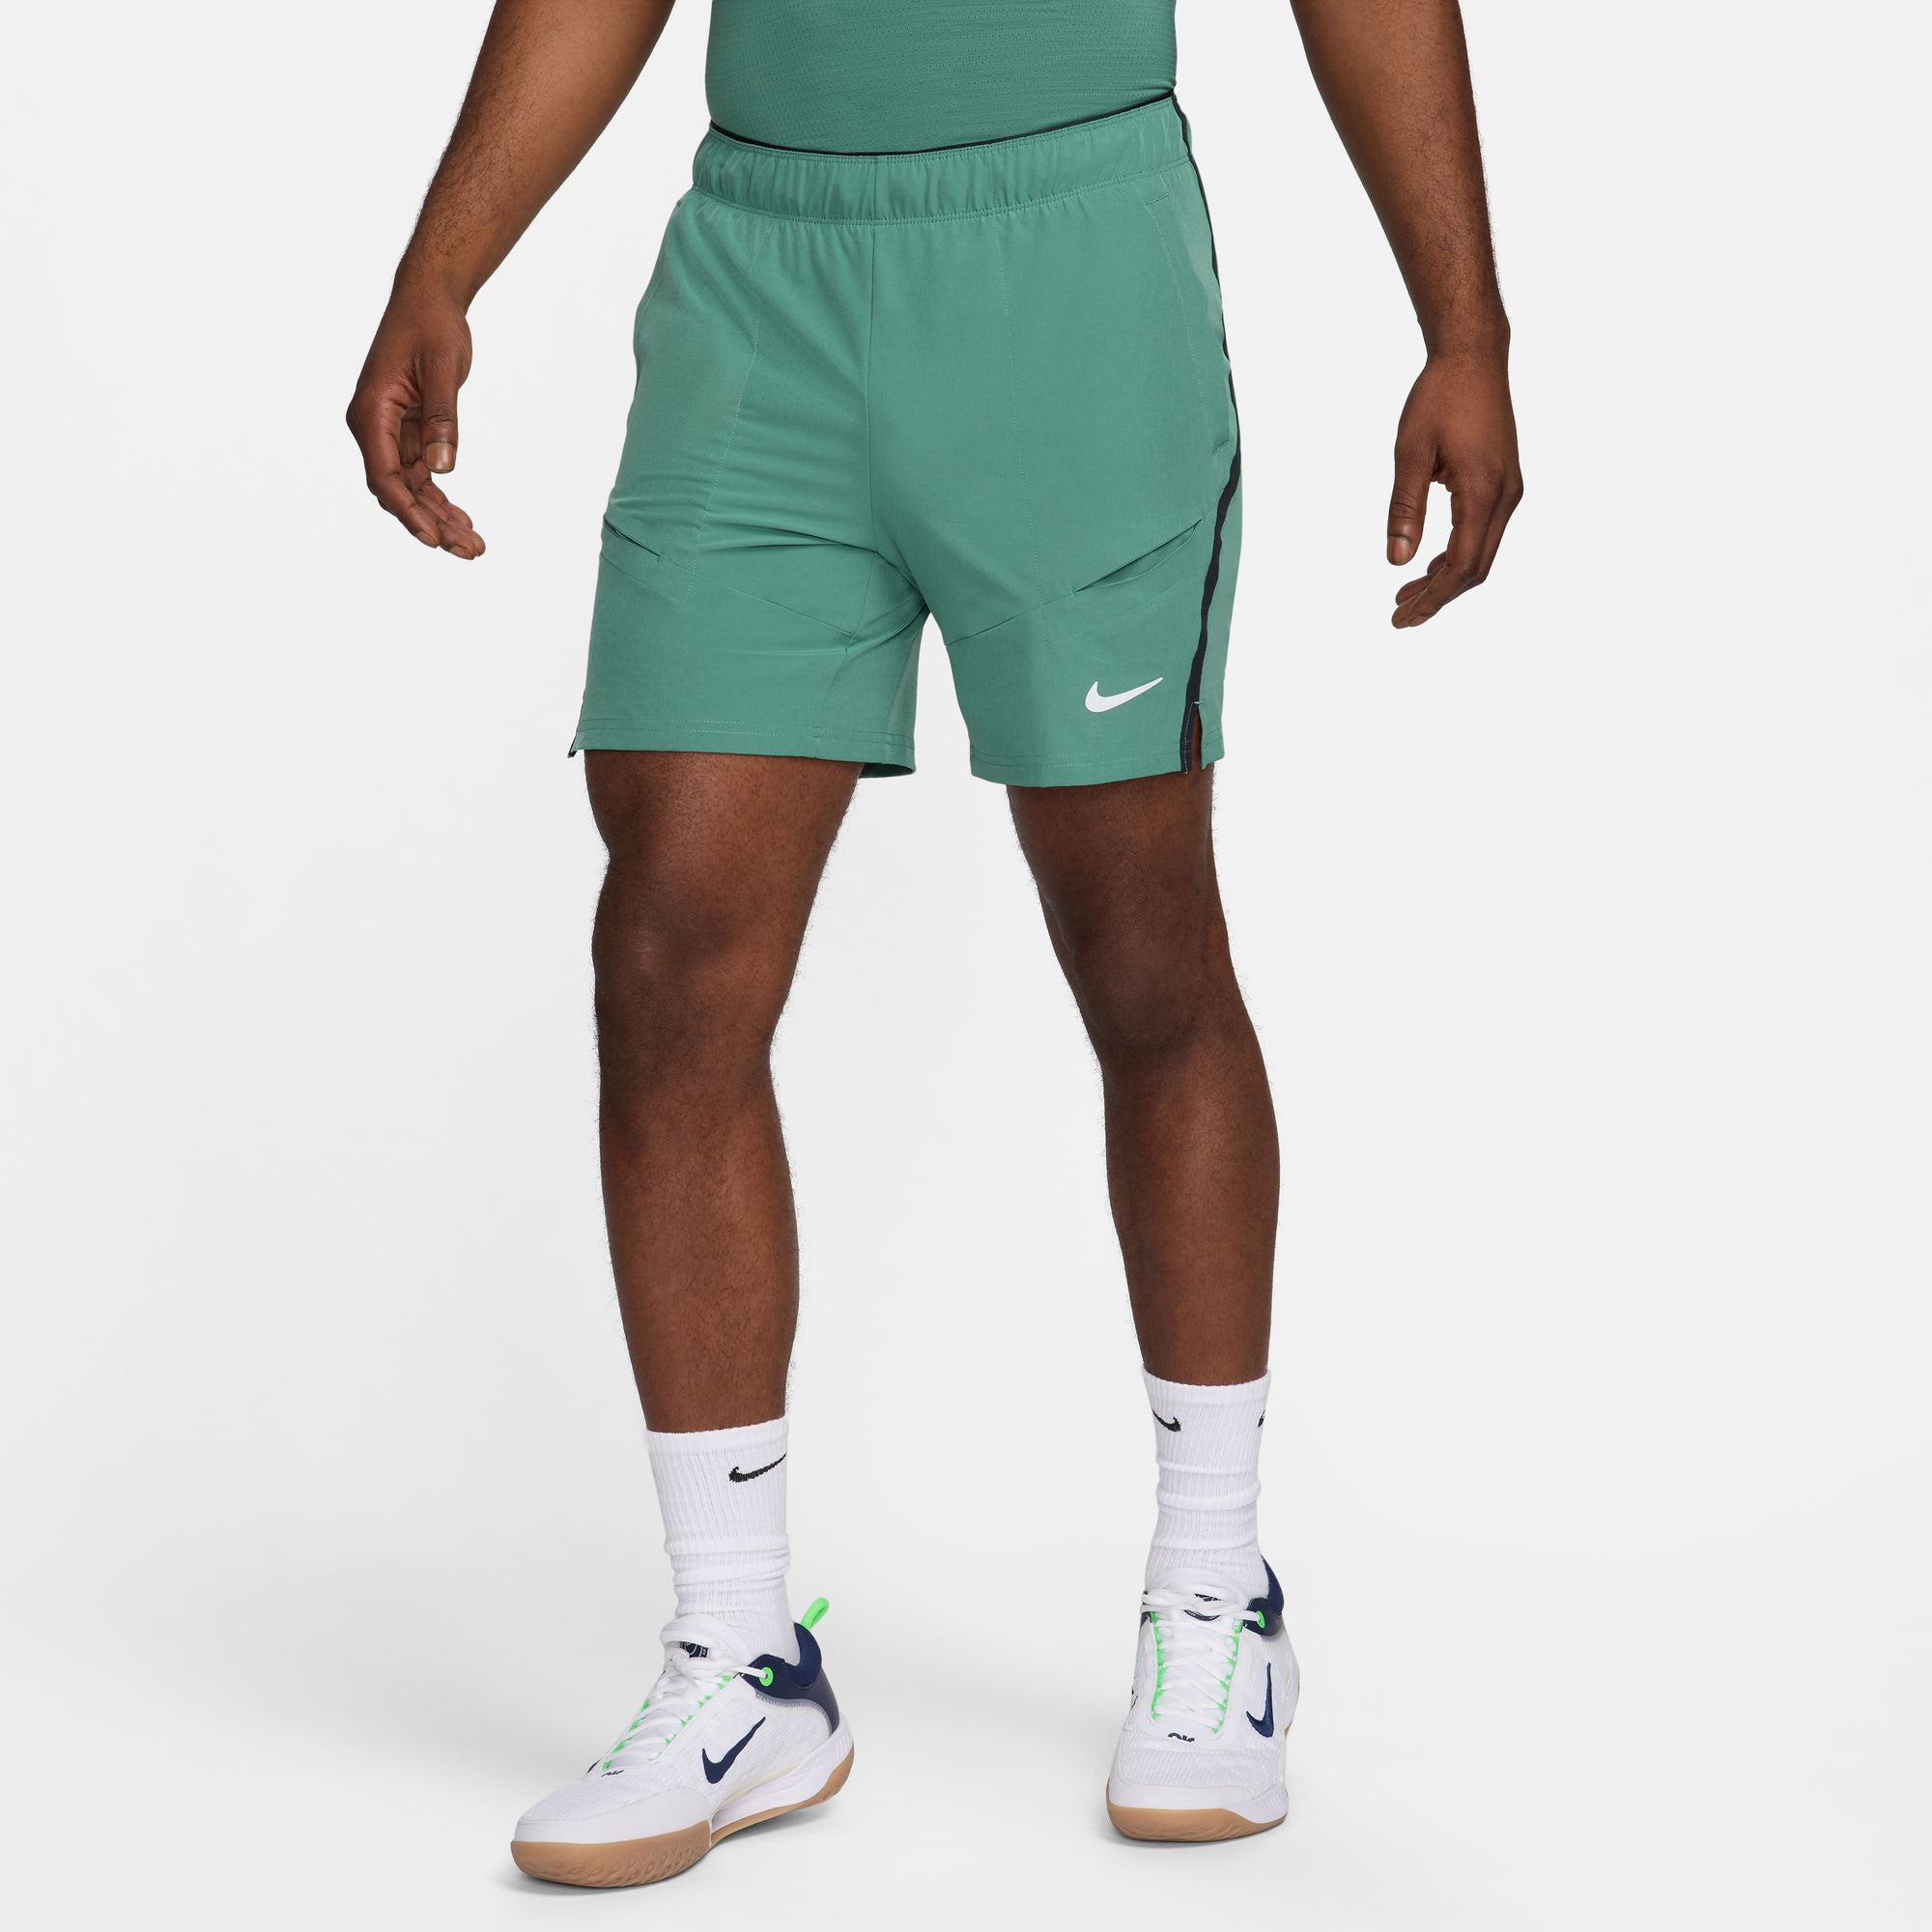 NikeCourt Advantage Men's Dri-FIT 7-Inch Tennis Shorts - Green (1)